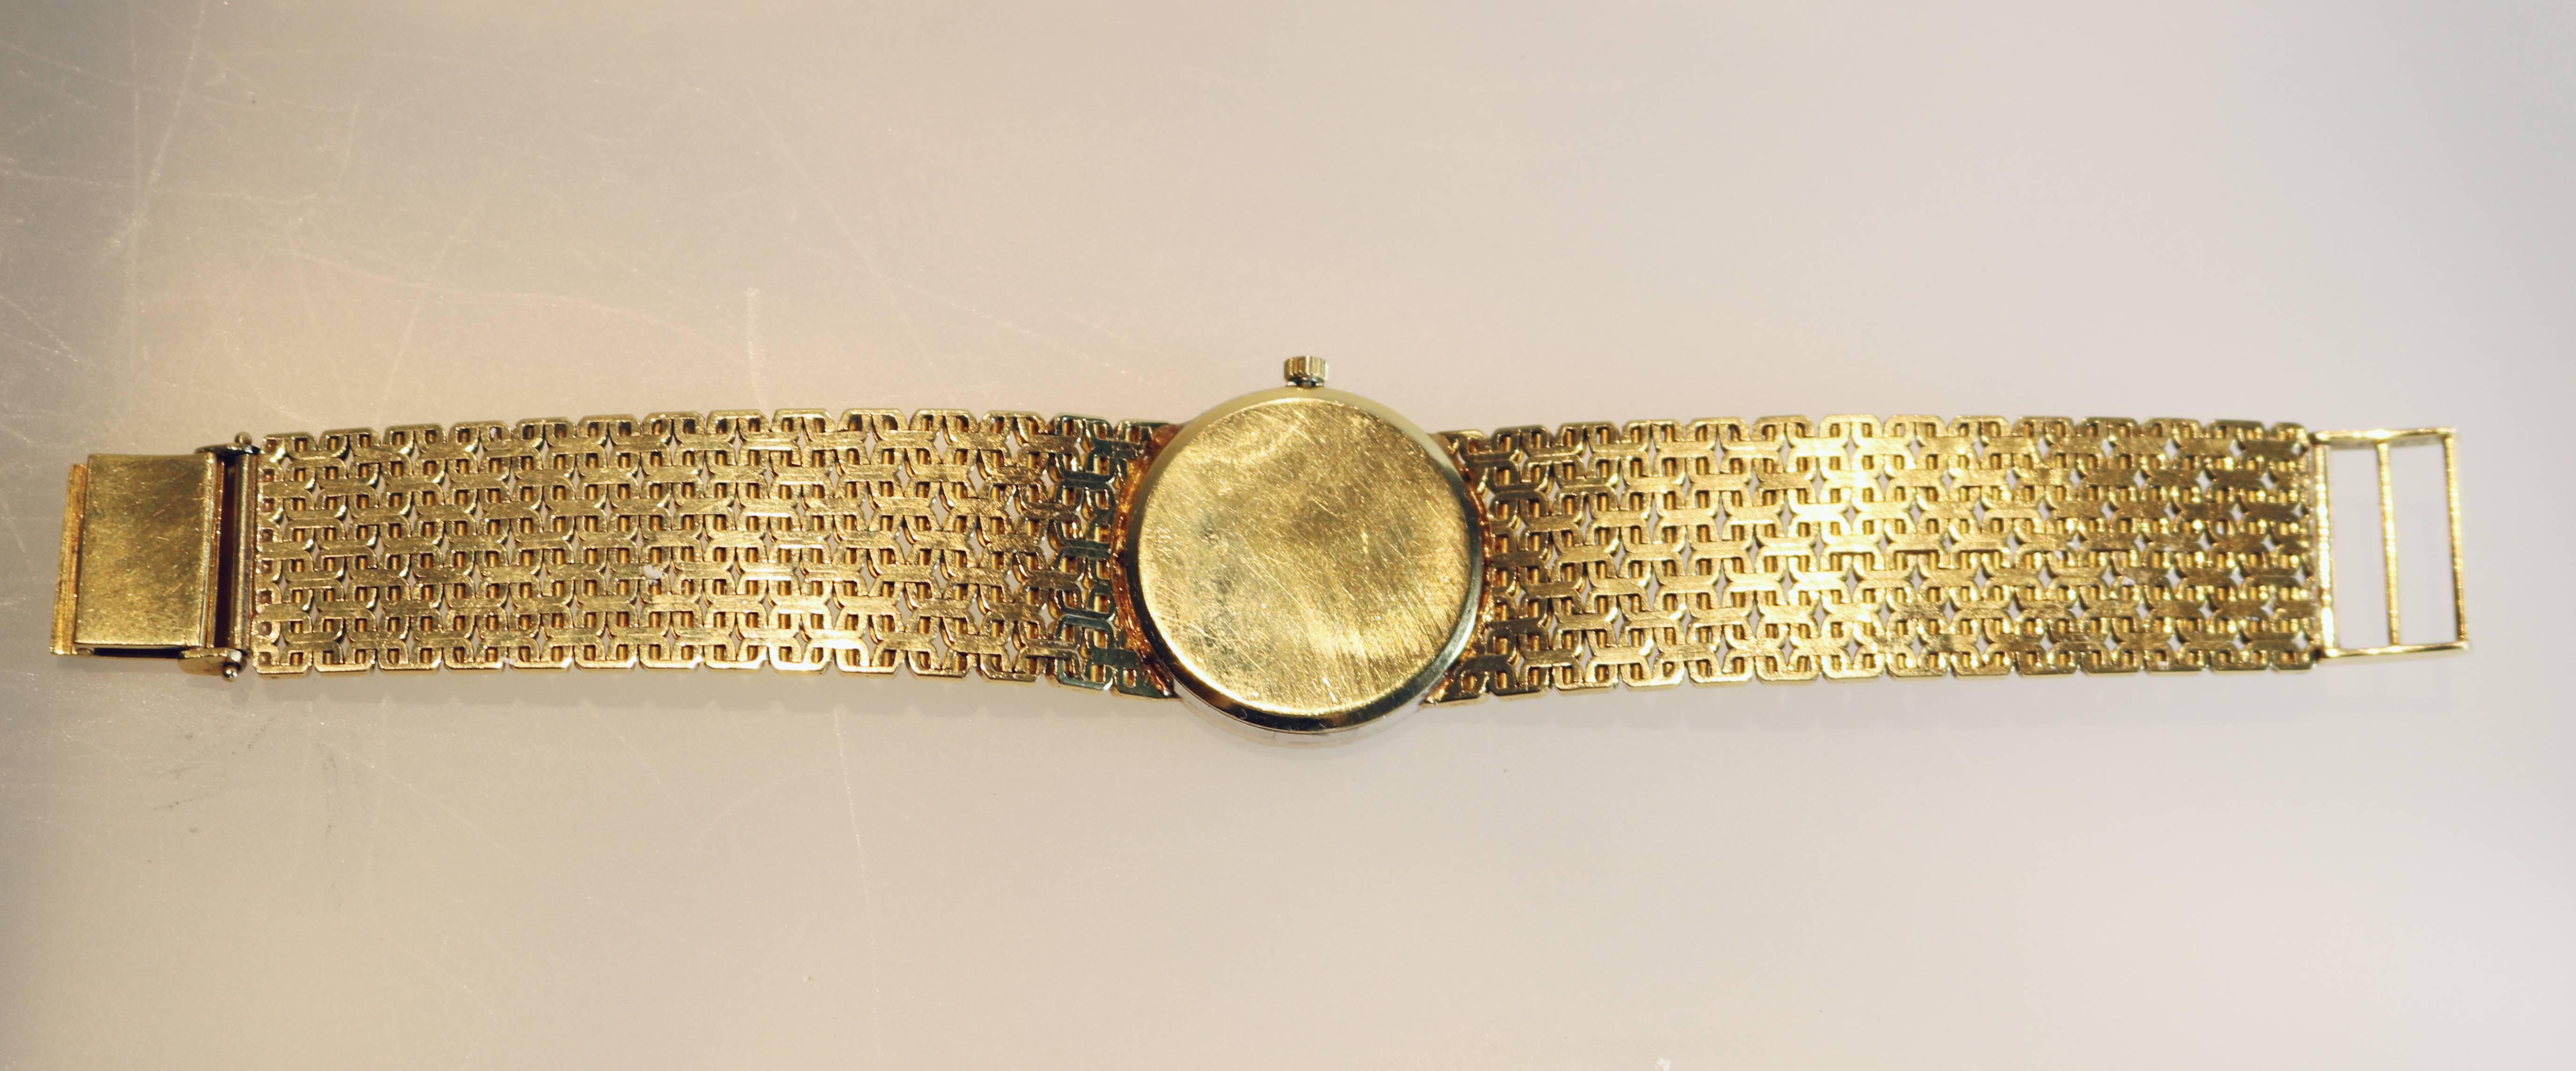 Ladies Ebel watch in 18K gold with a diamond bezel set with single cut diamonds. Italian gold Corletto bracelet measuring 5 3/4